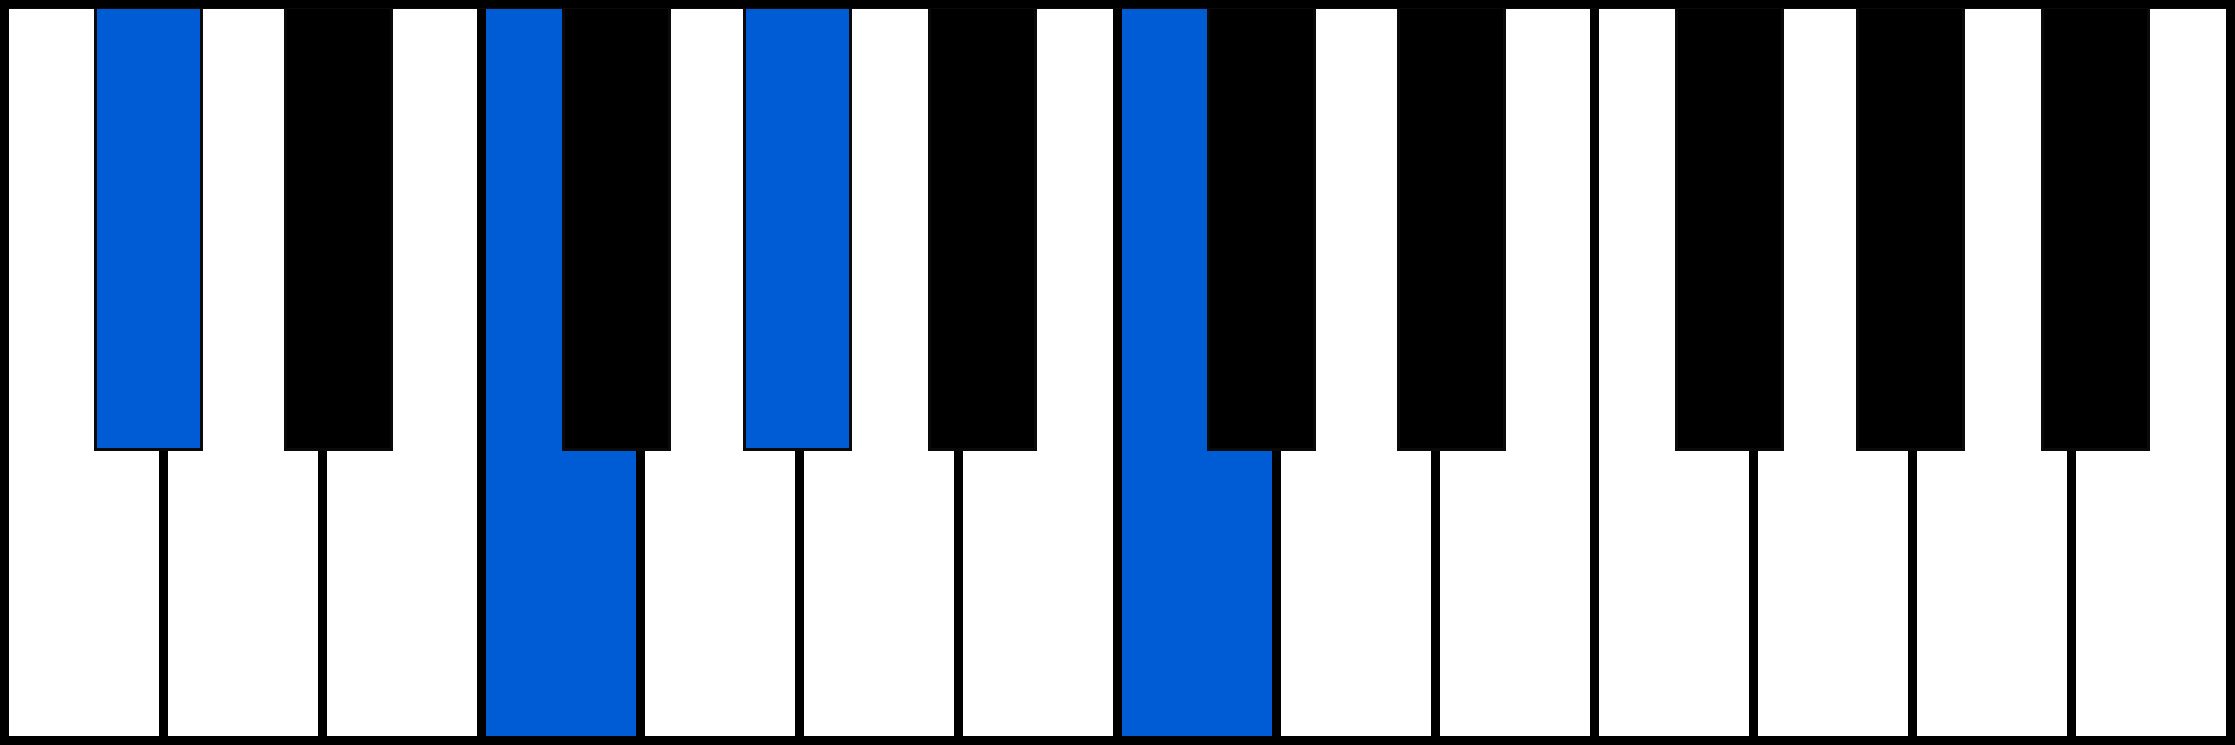 C#maj7 piano chord fingering